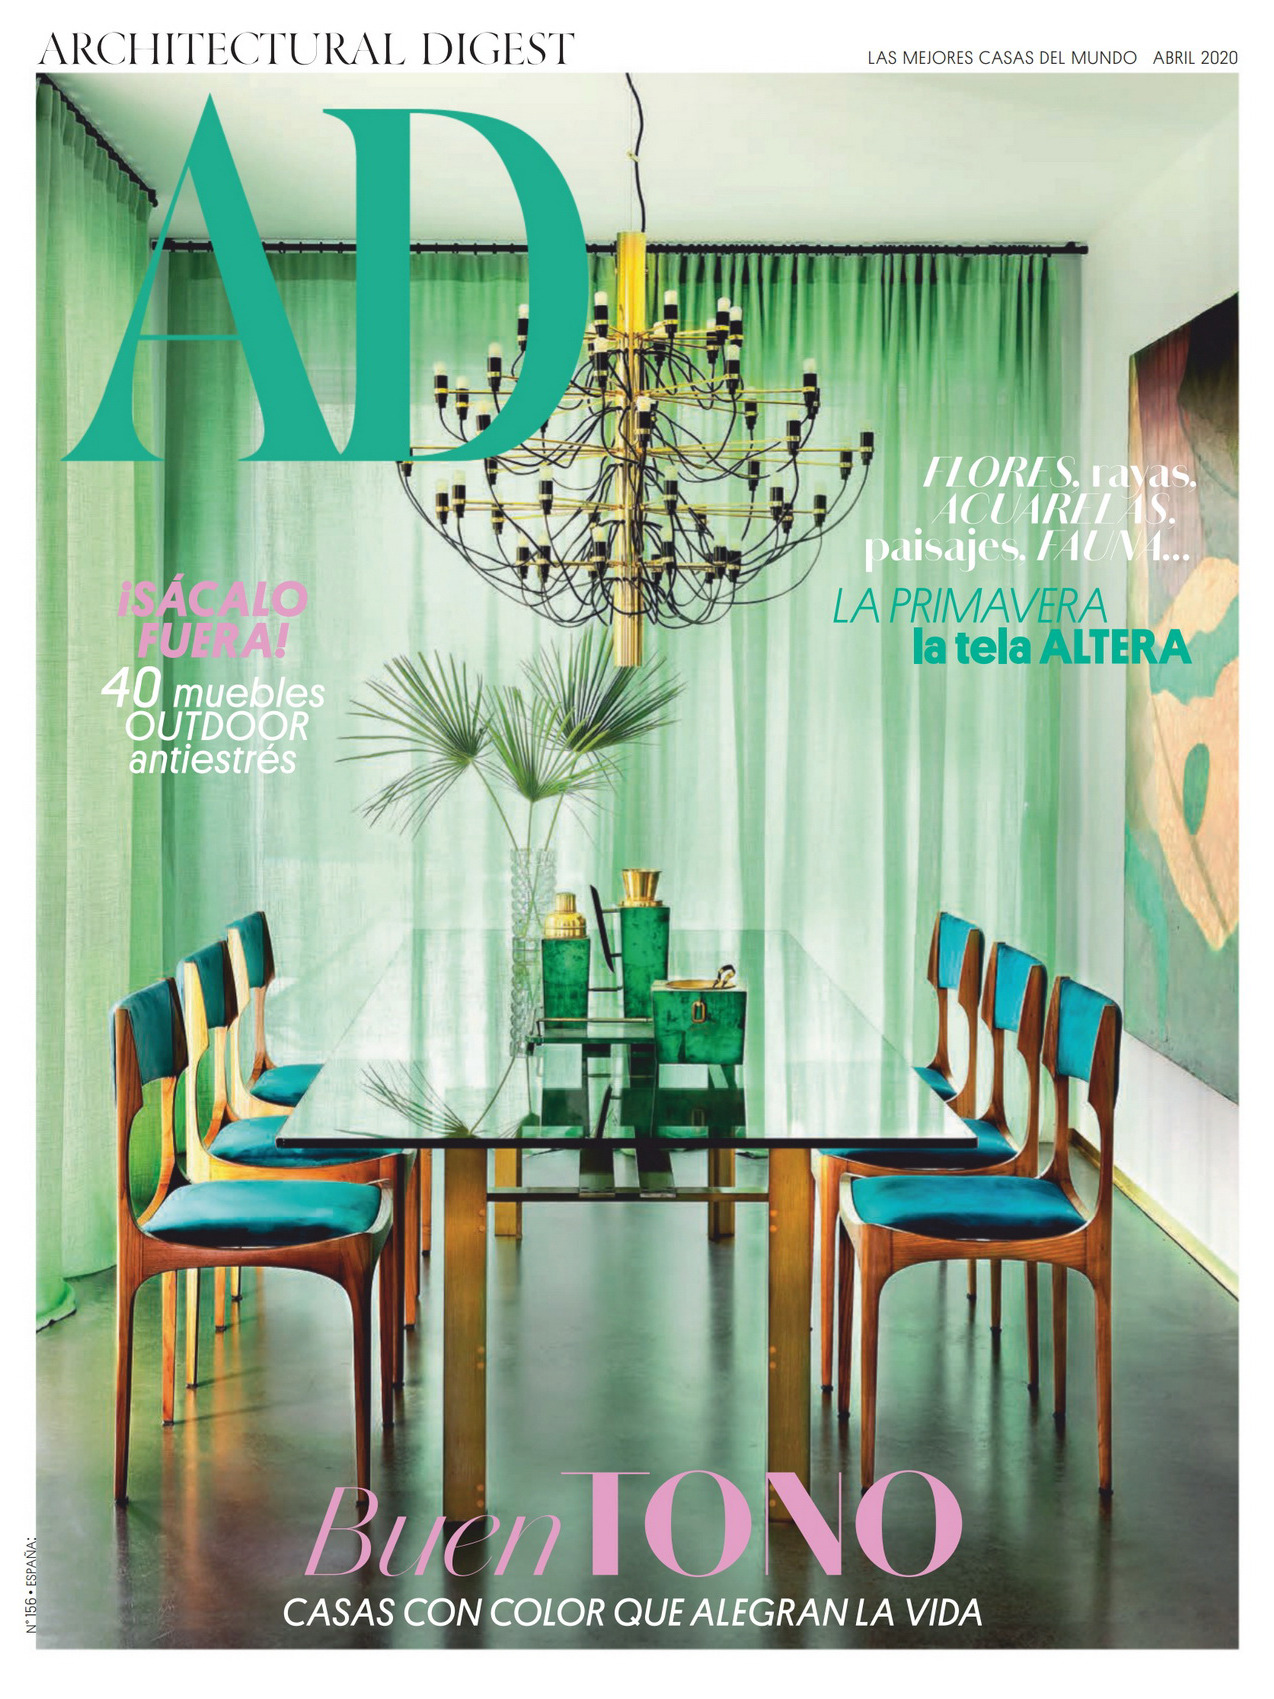 《AD》西班牙版室内室外设计杂志2020年04月号